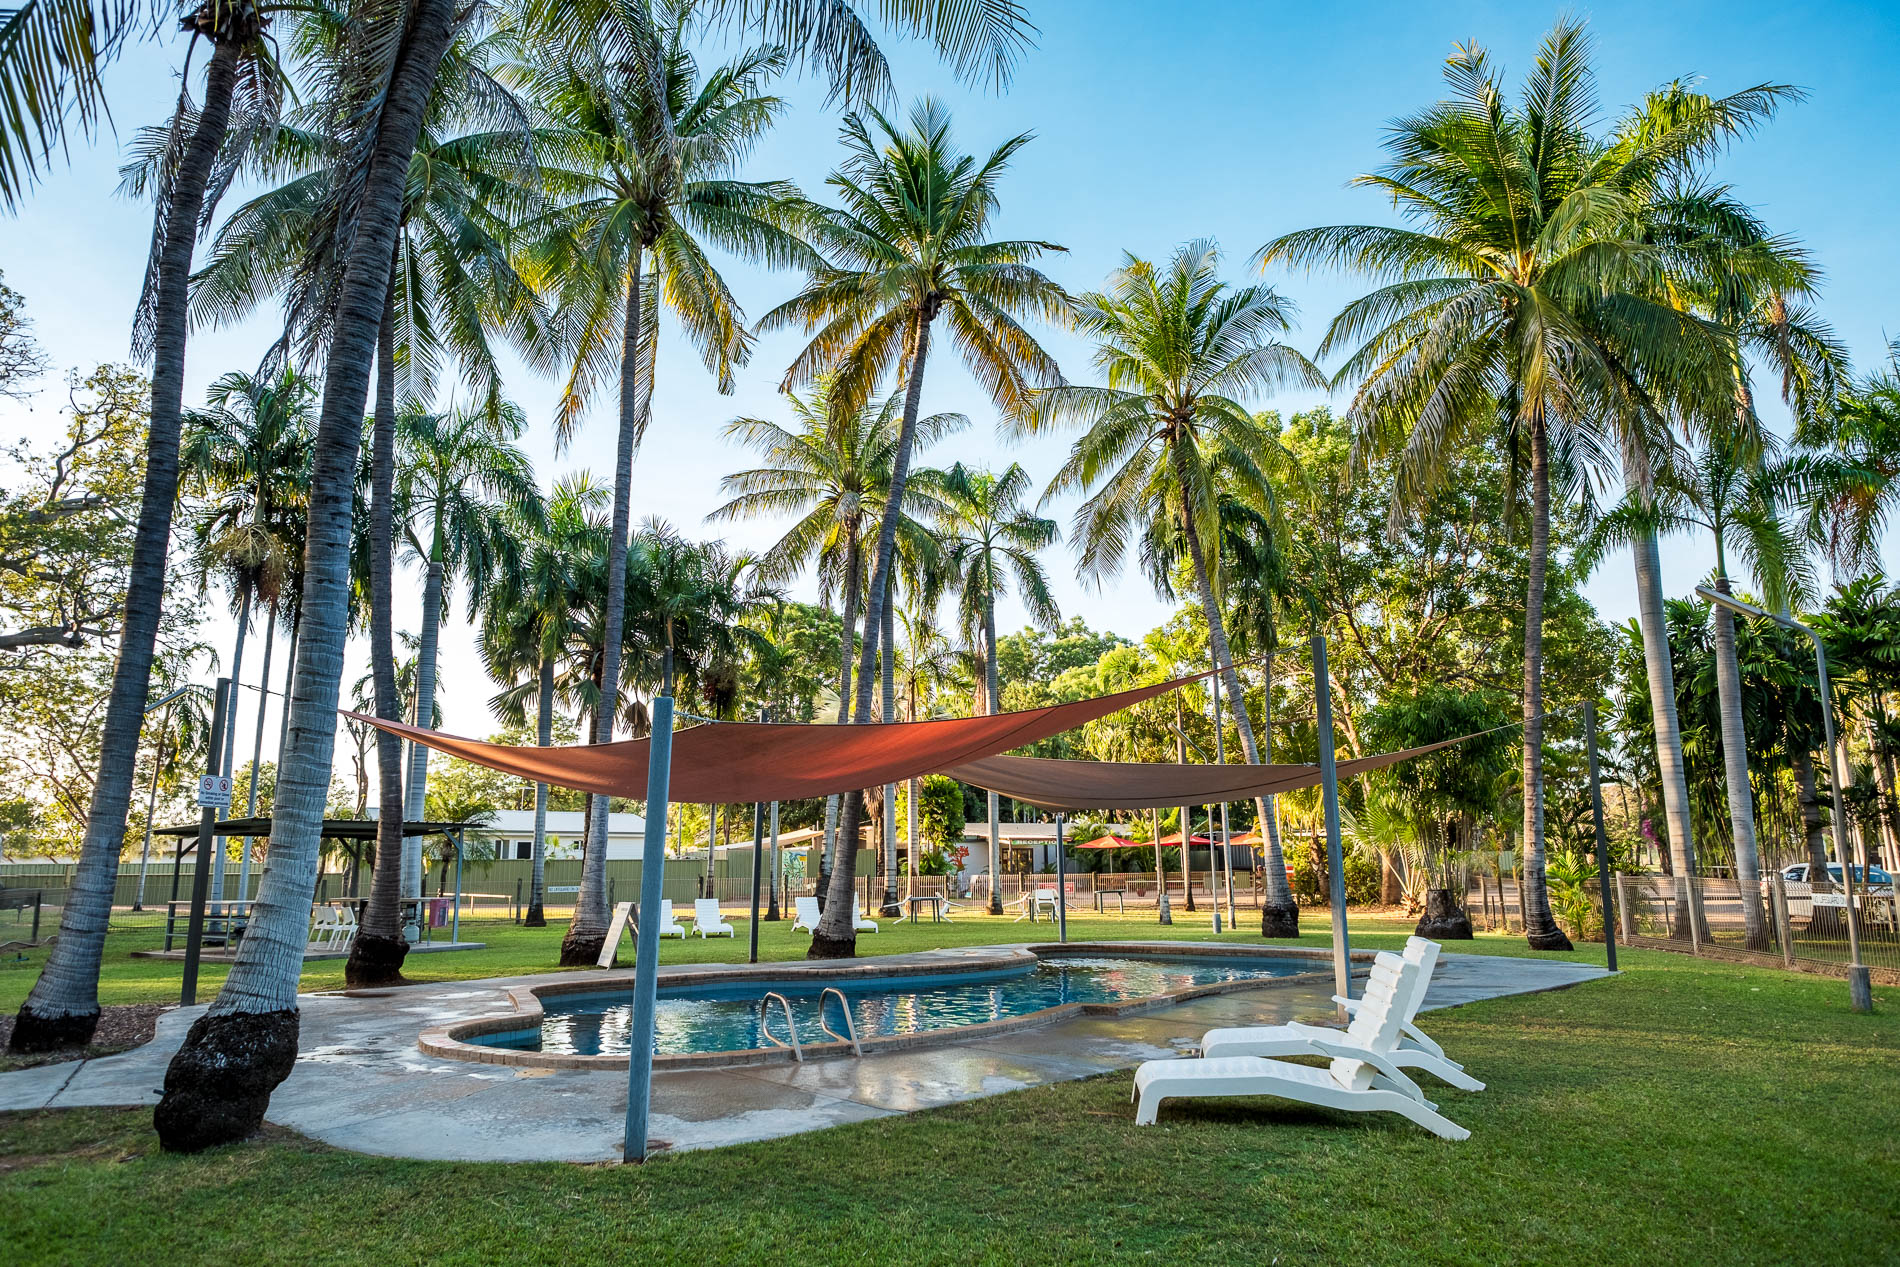 Coconut Palms Tropical Setting Pool